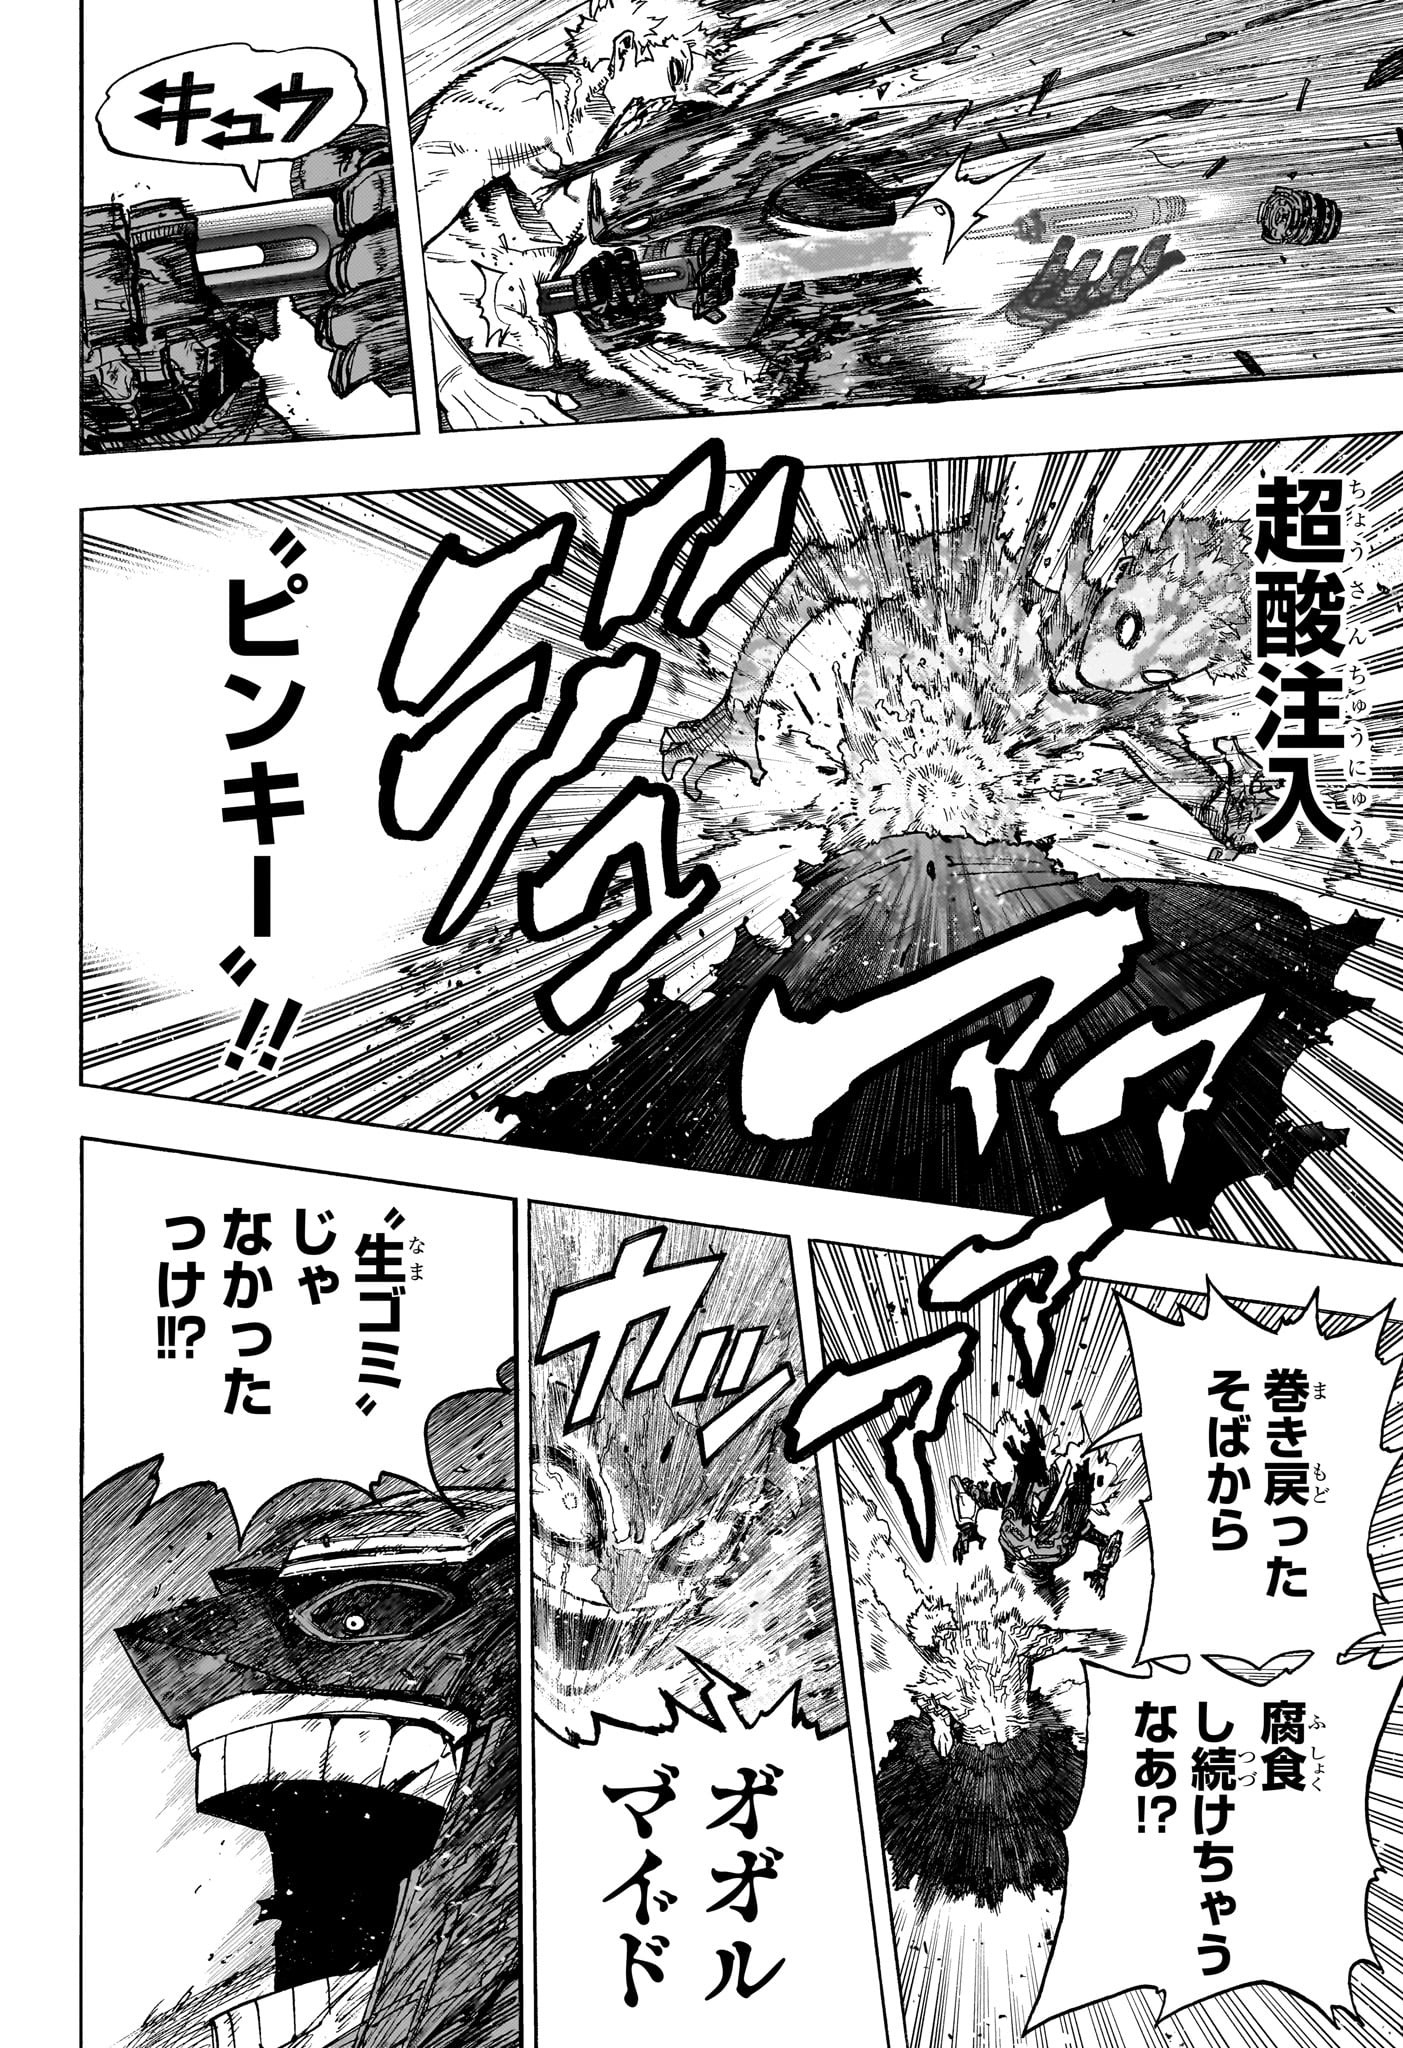 Boku no Hero Academia - Chapter 398 - Page 2